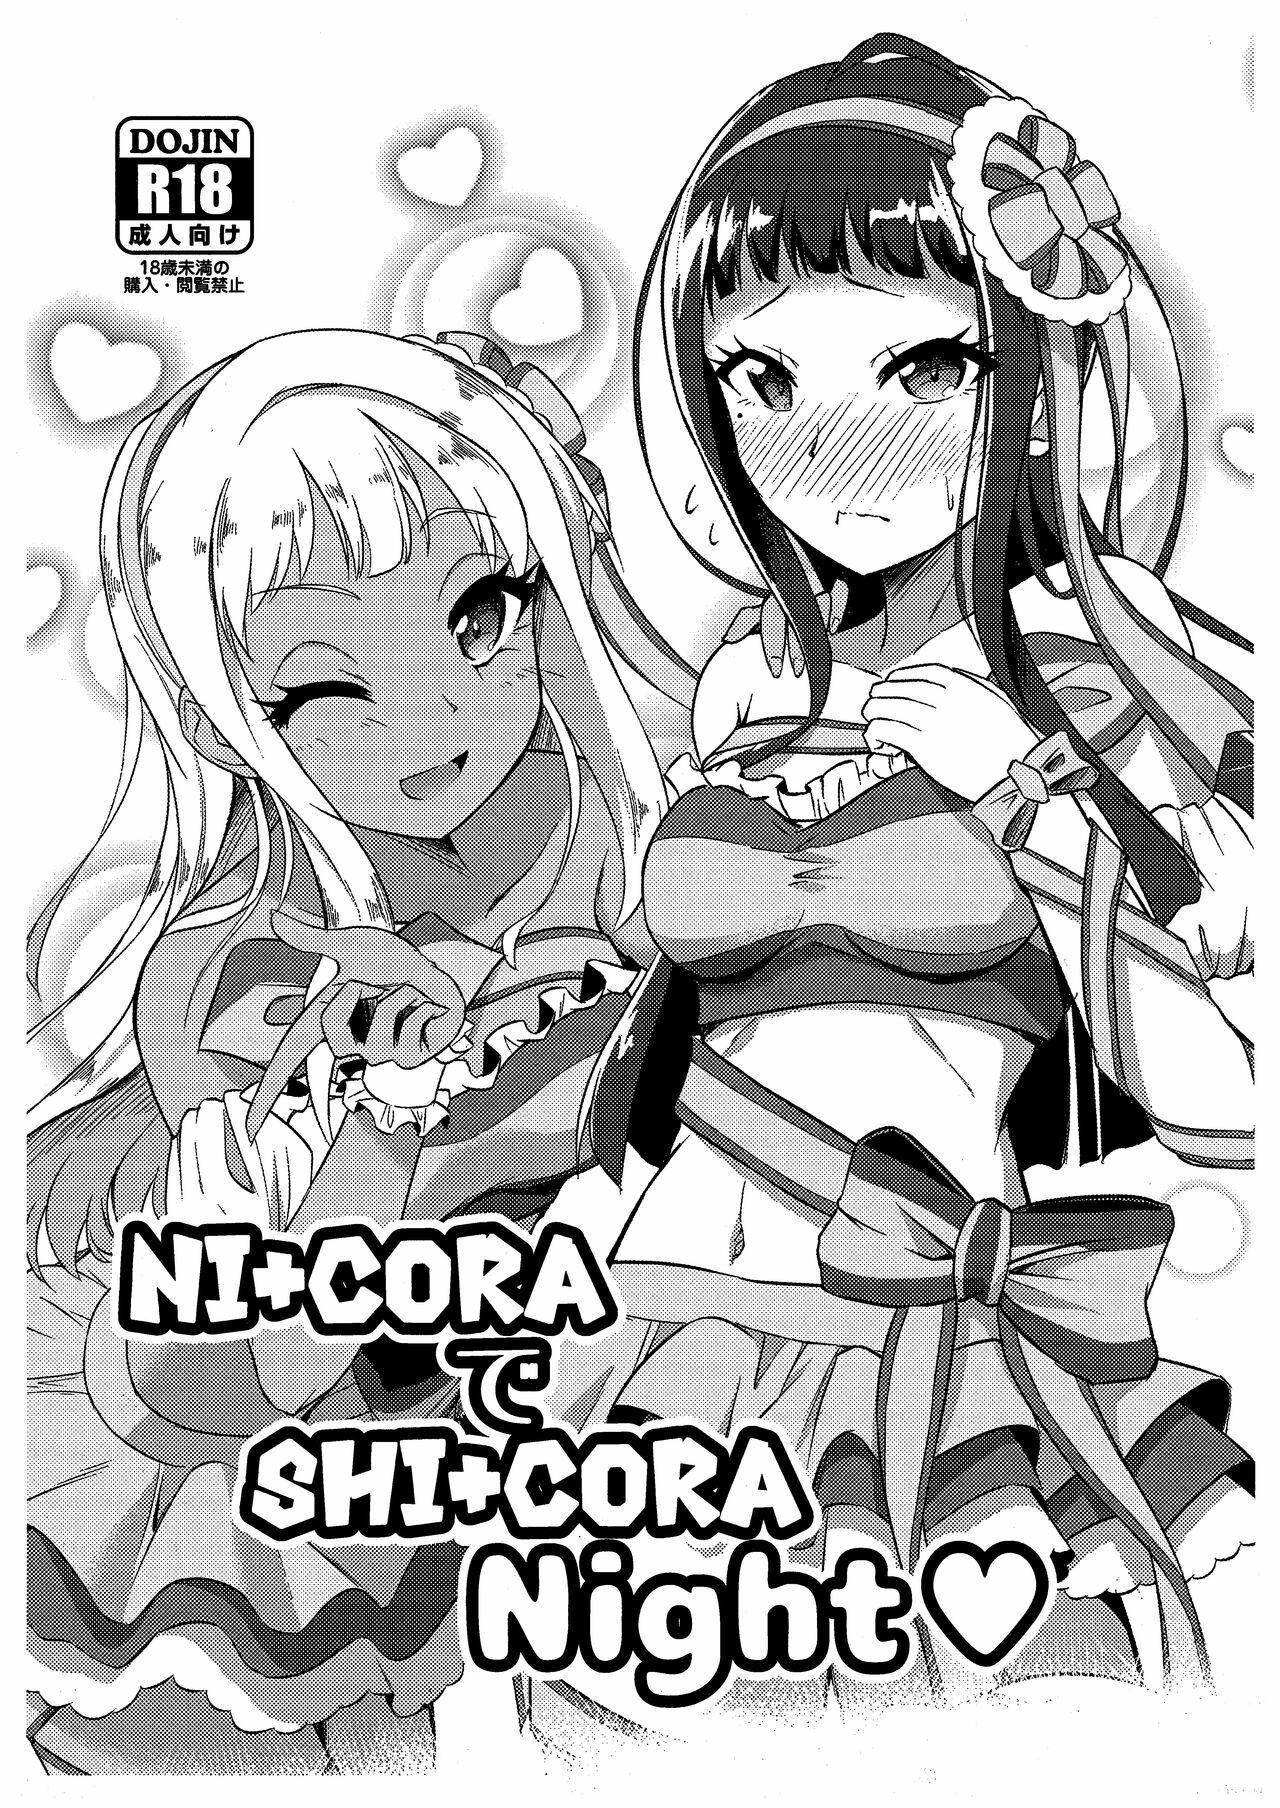 Hardcore Gay NI+CORA de SHI+CORA Night - Tokyo 7th sisters Shecock - Page 1